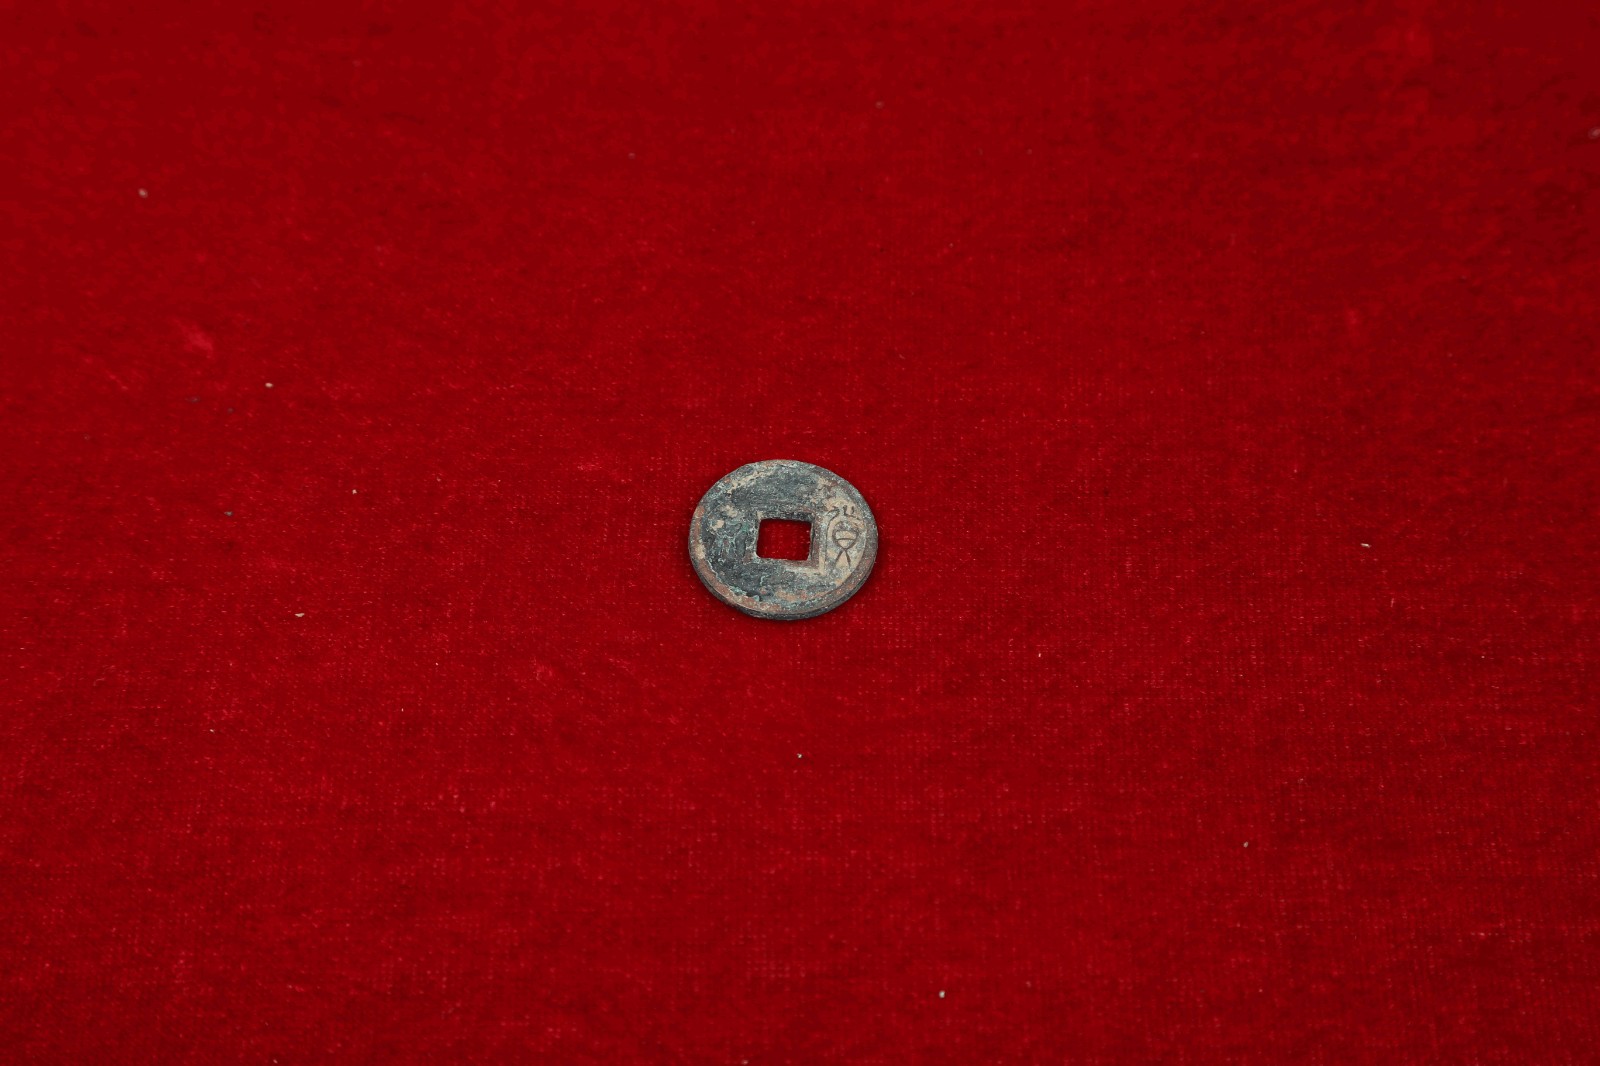 SDCS201709744—货泉铜钱，直径2.4米，厚度0.24厘米，重3.4克。.JPG